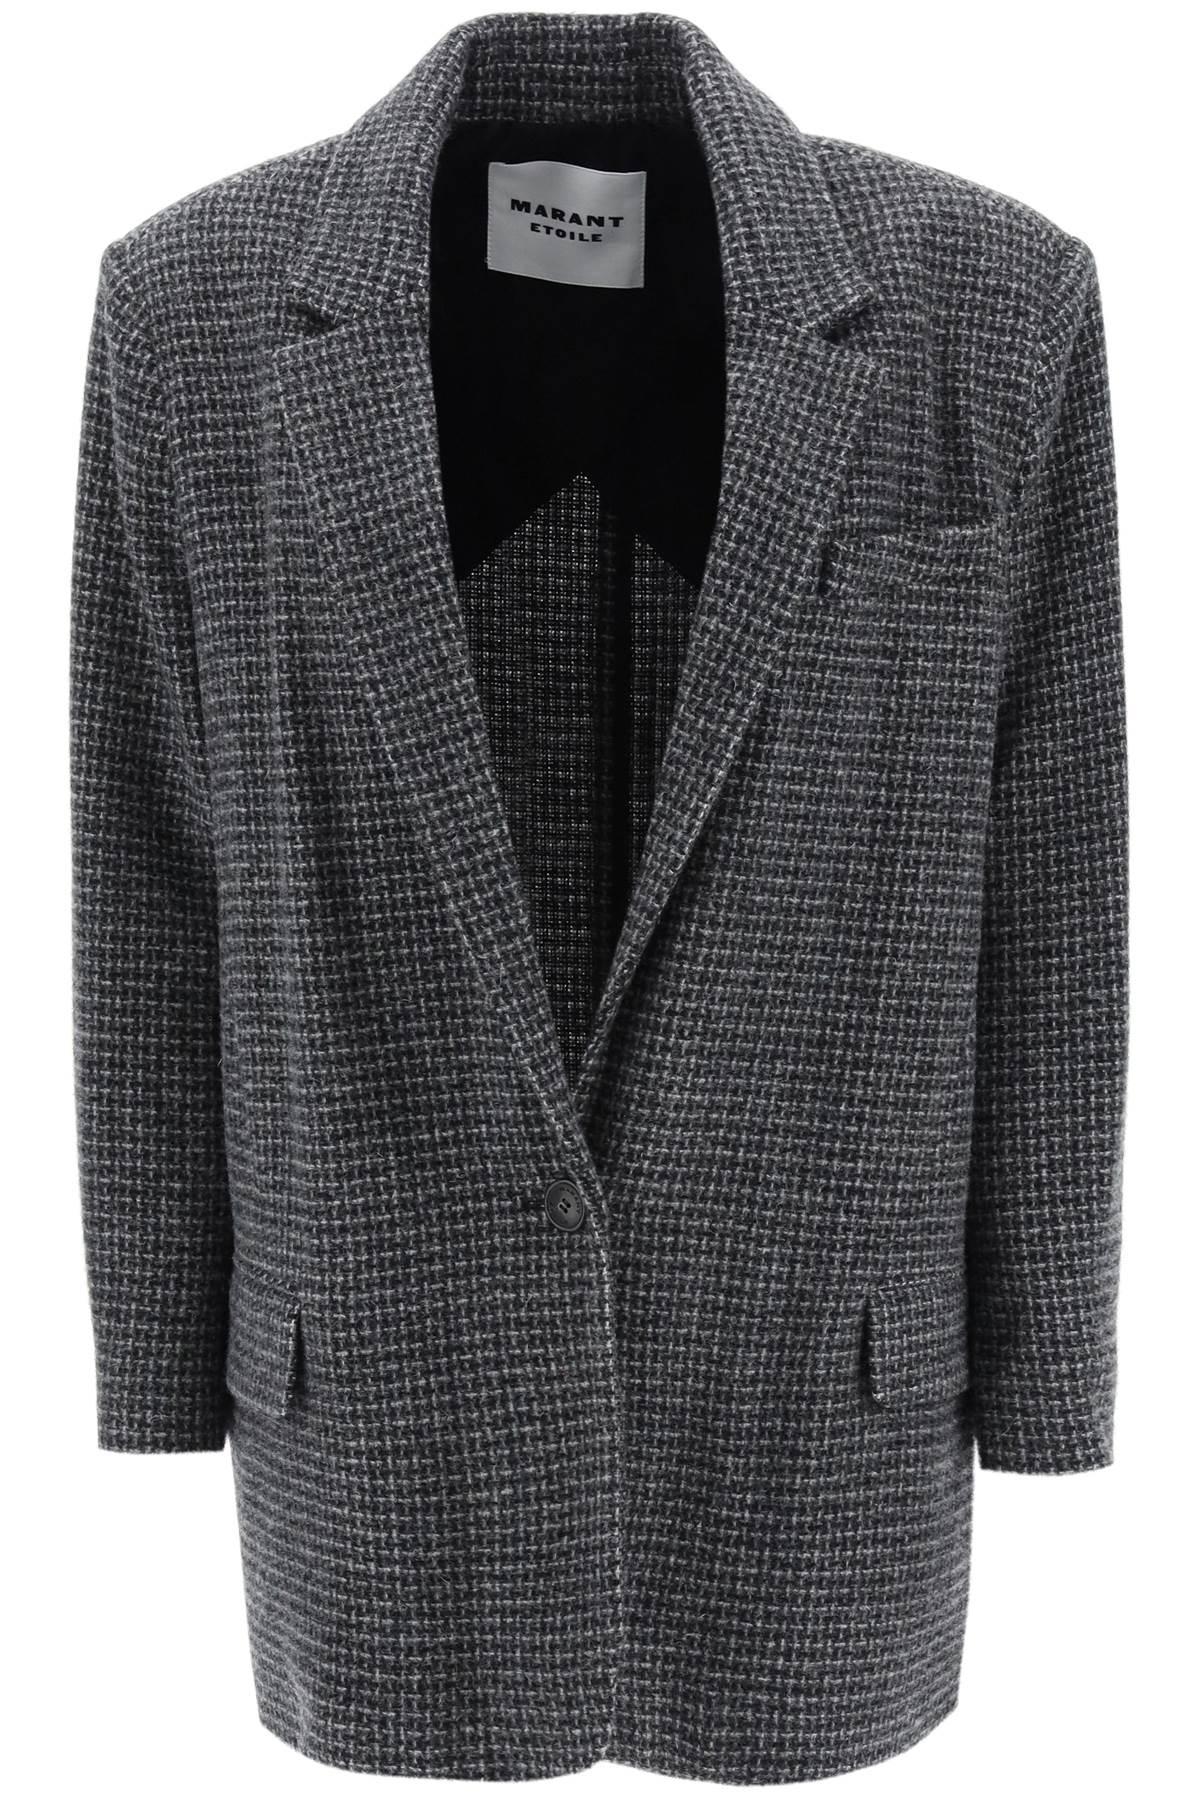 Marant Etoile Cikaito Wool Blazer With Check Motif In Gy Grey